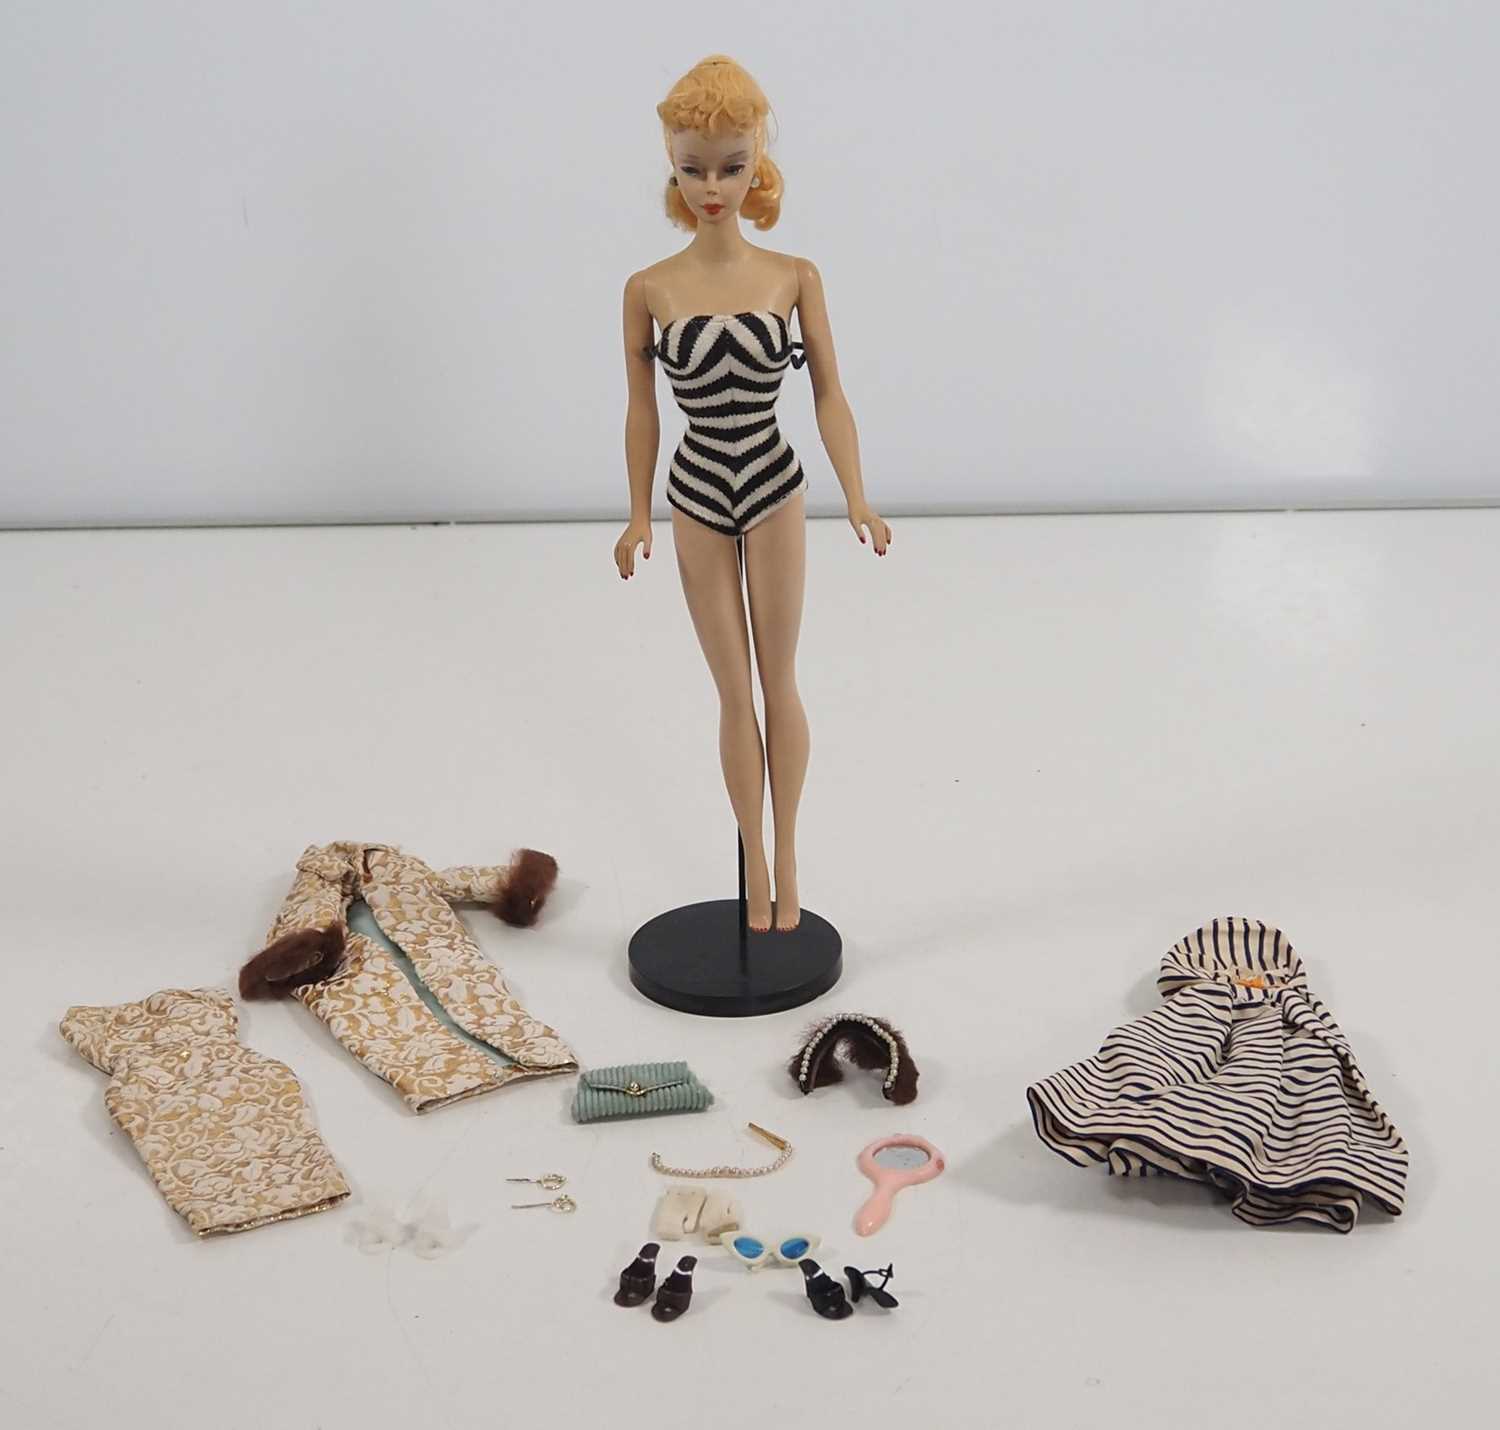 An original vintage MATTEL BARBIE doll, circa 1959/60, complete with swimsuit, mule shoes,